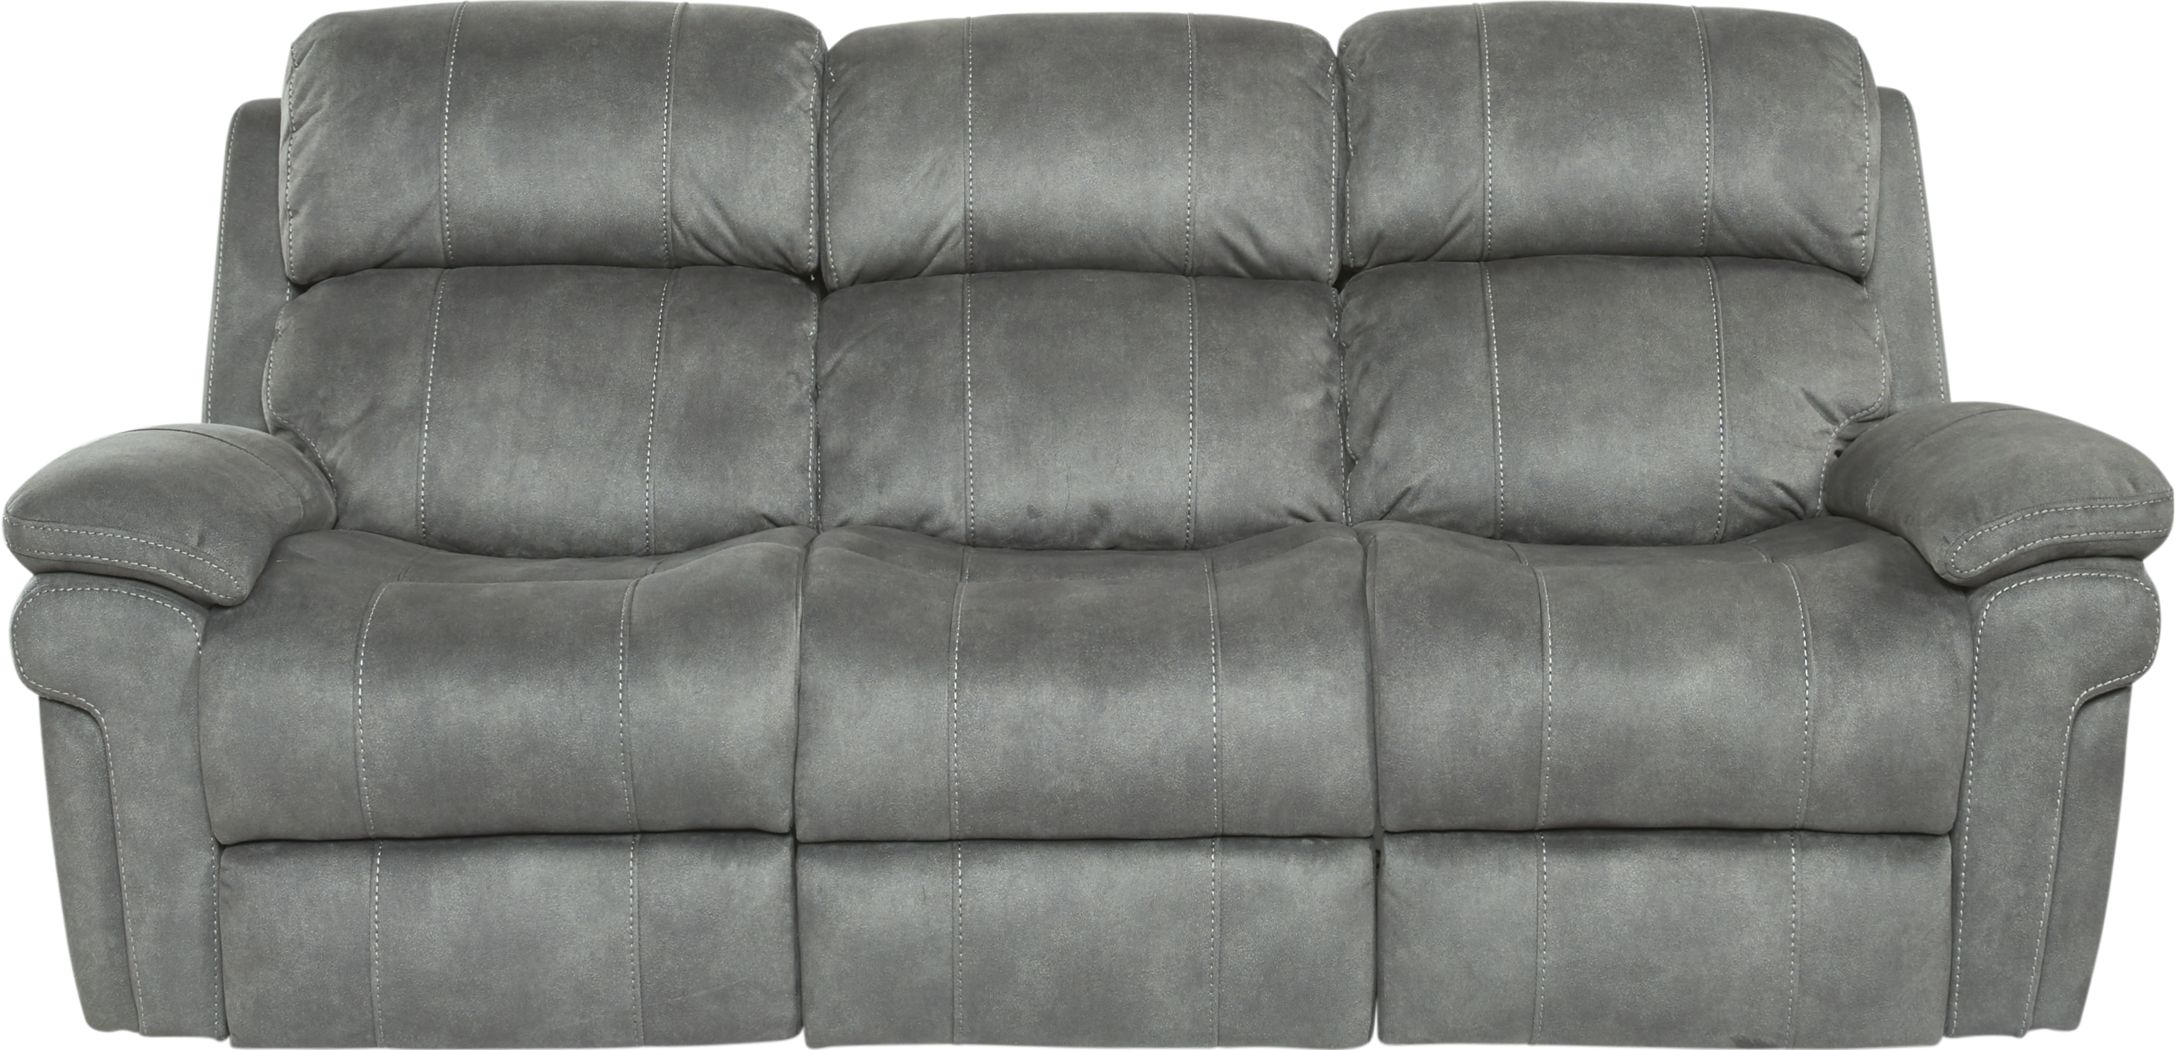 Glendale Charcoal Reclining Sofa